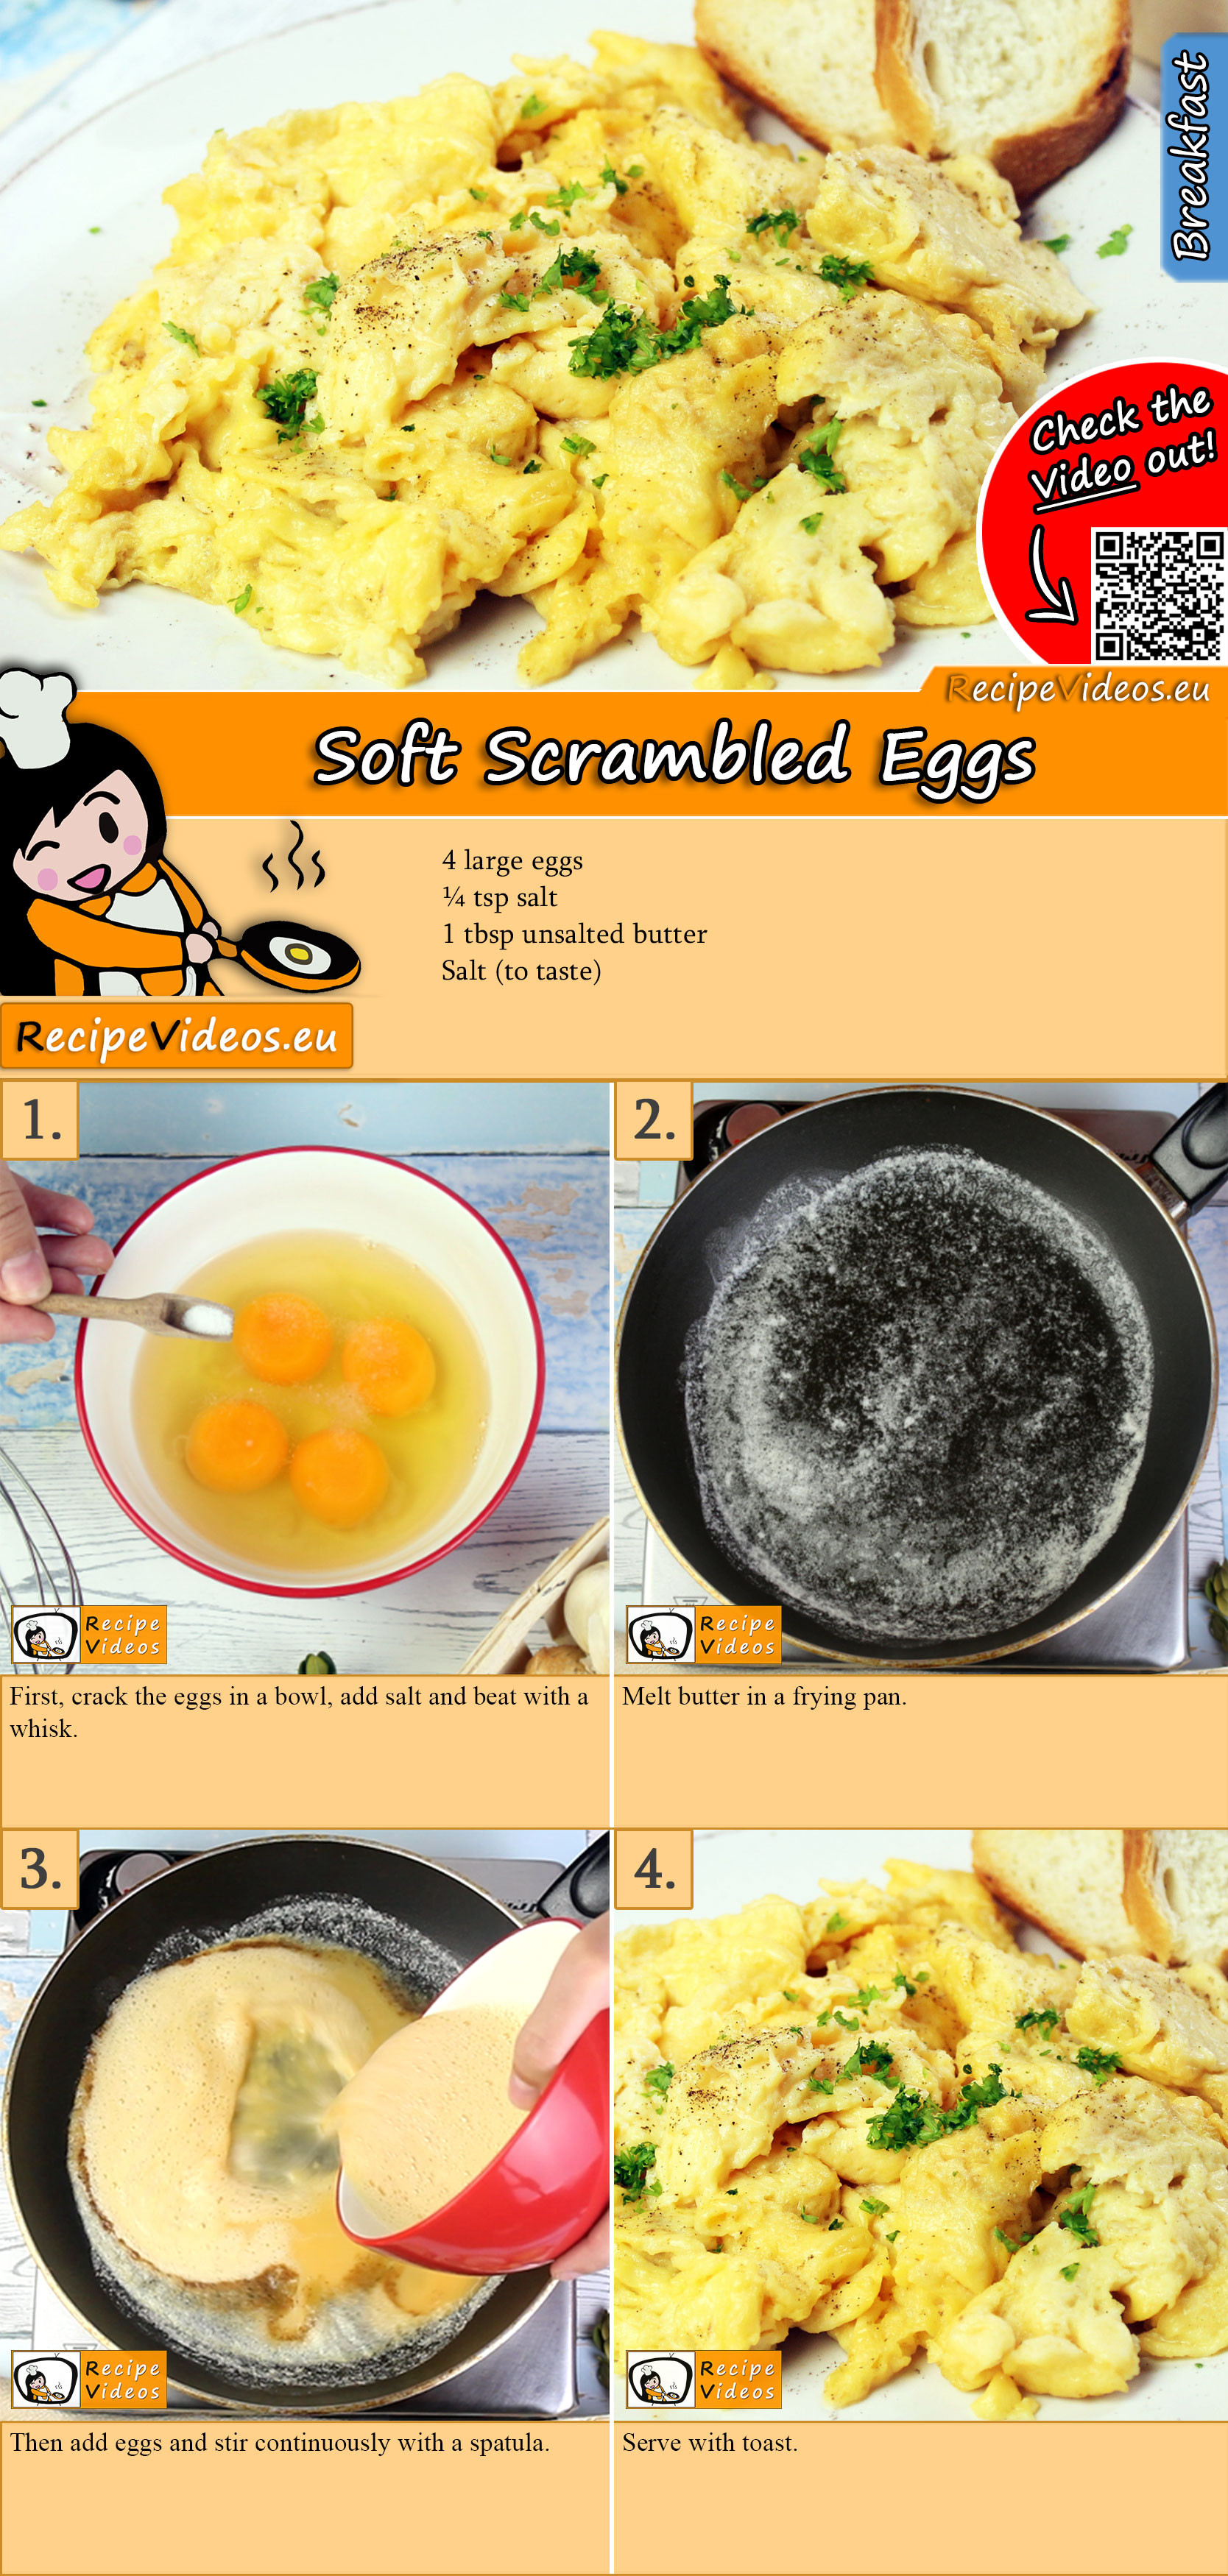 Soft Scrambled Eggs recipe with video